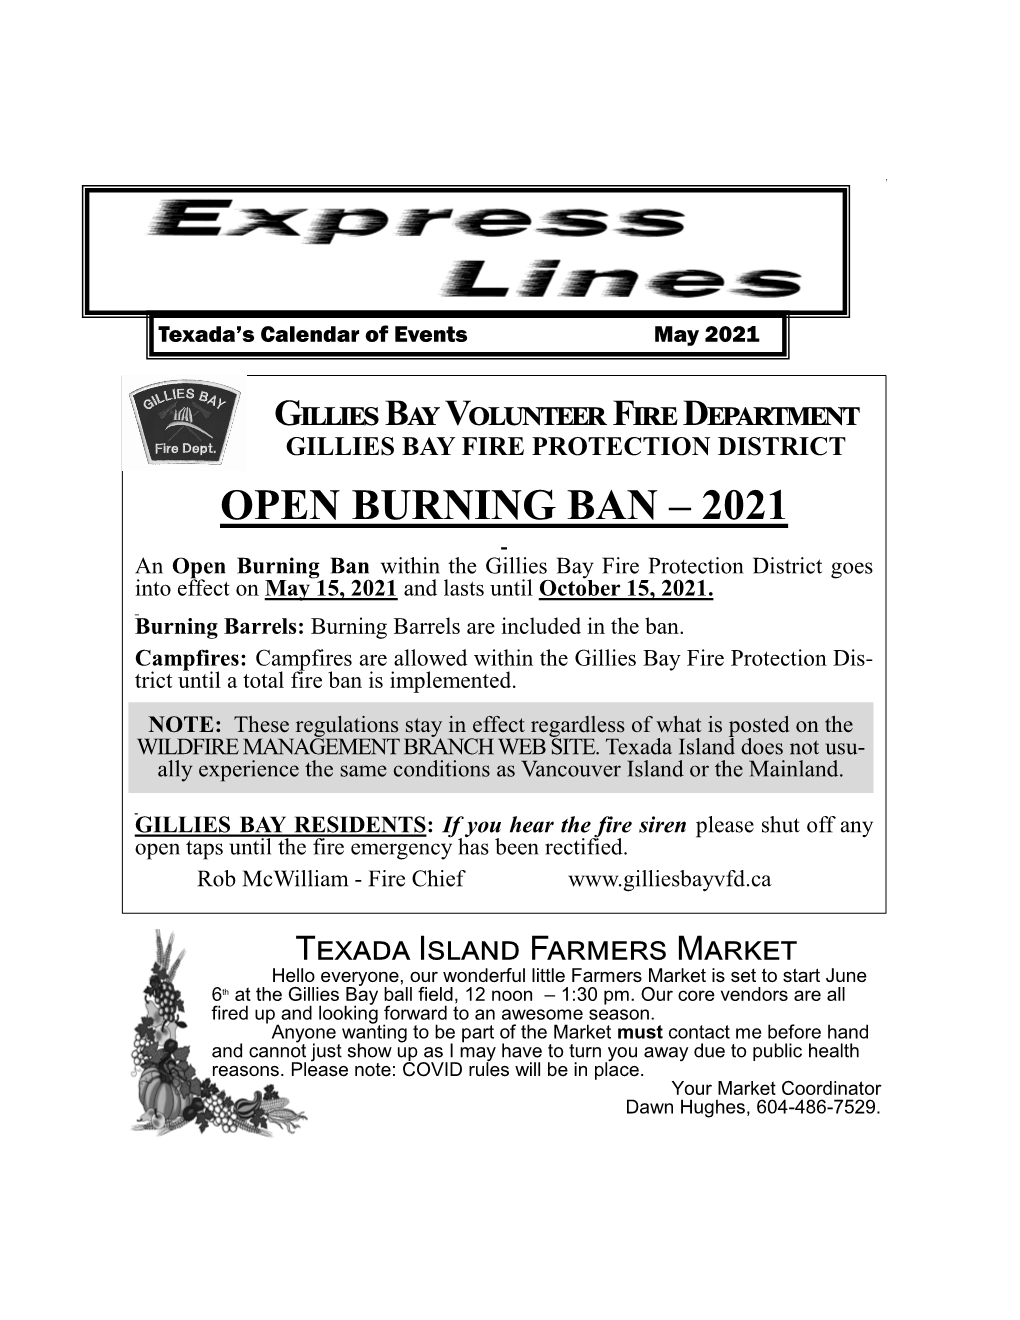 Open Burning Ban – 2021